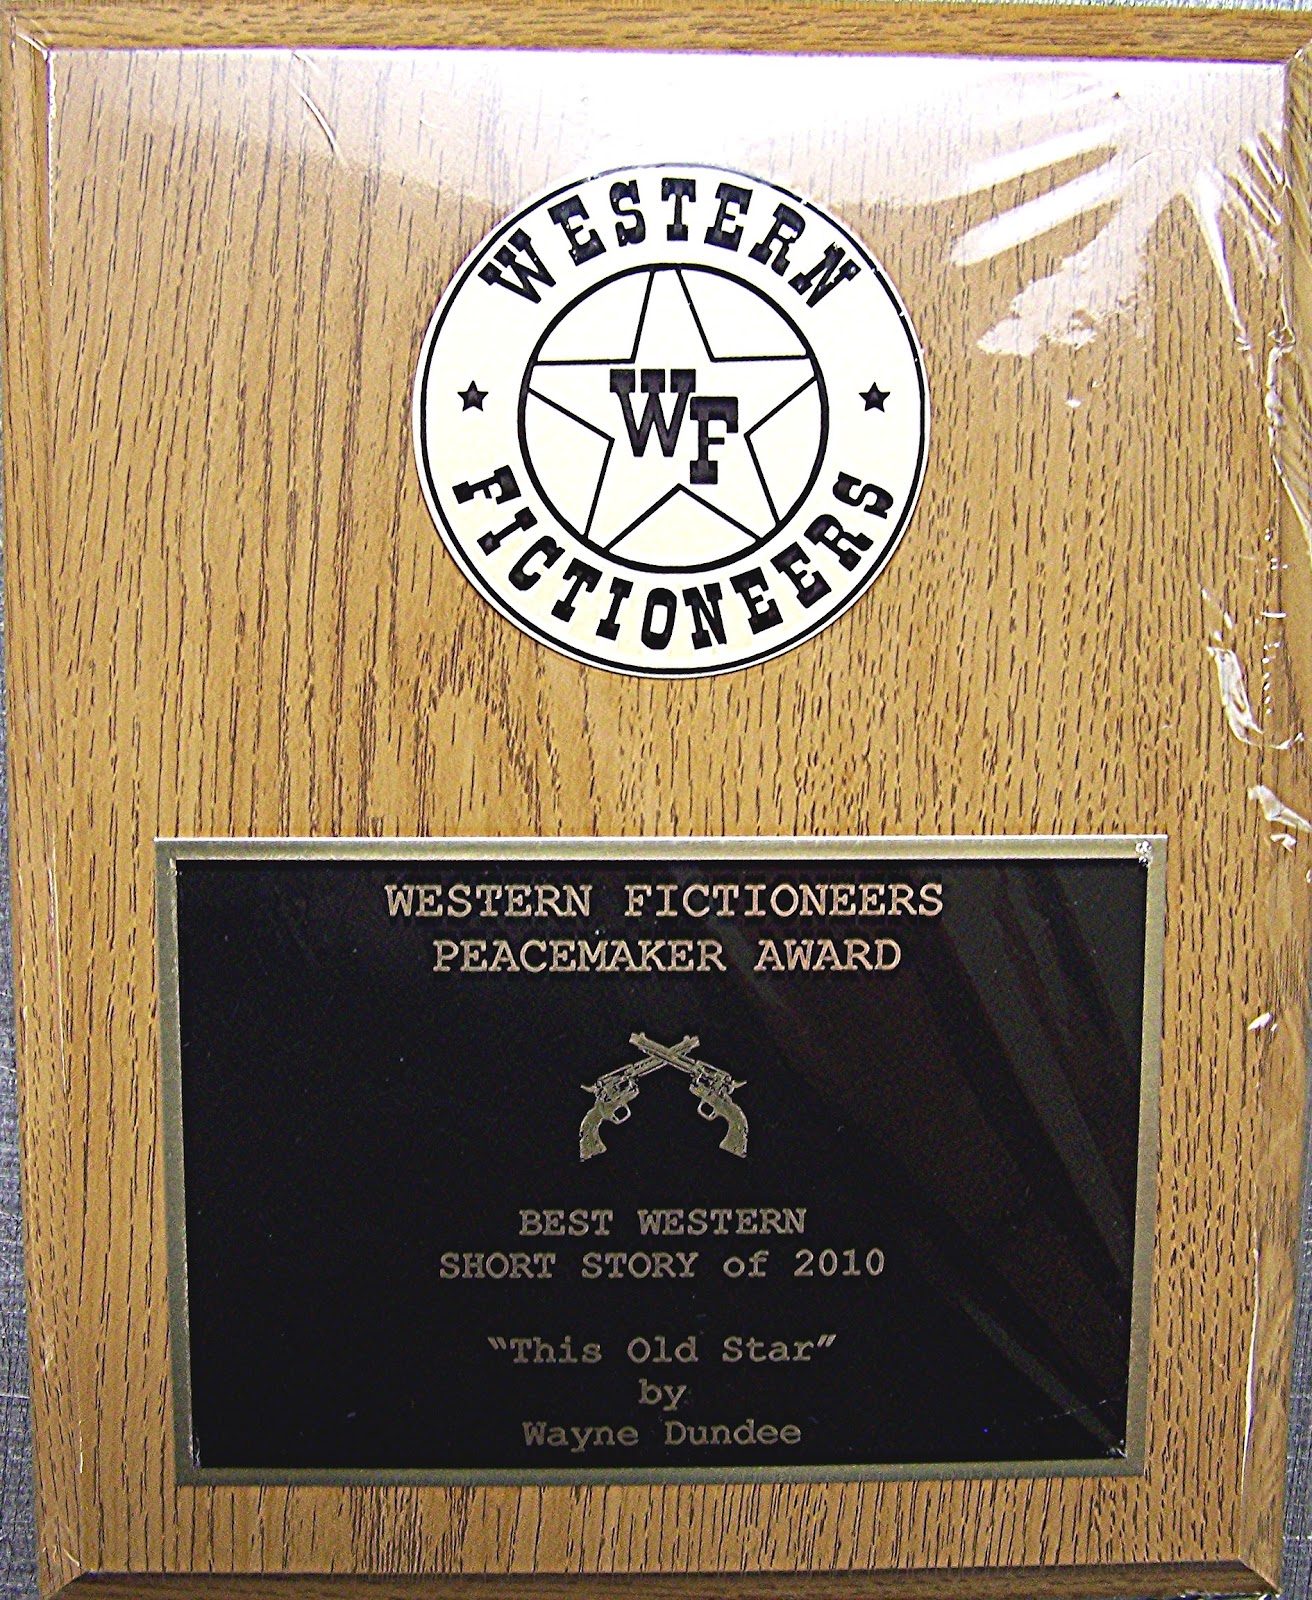 http://4.bp.blogspot.com/-YzRT7SJEdJM/T8irs-0TRAI/AAAAAAAAAZA/bAwqVdOlLAg/s1600/Peacemaker+award1.JPG